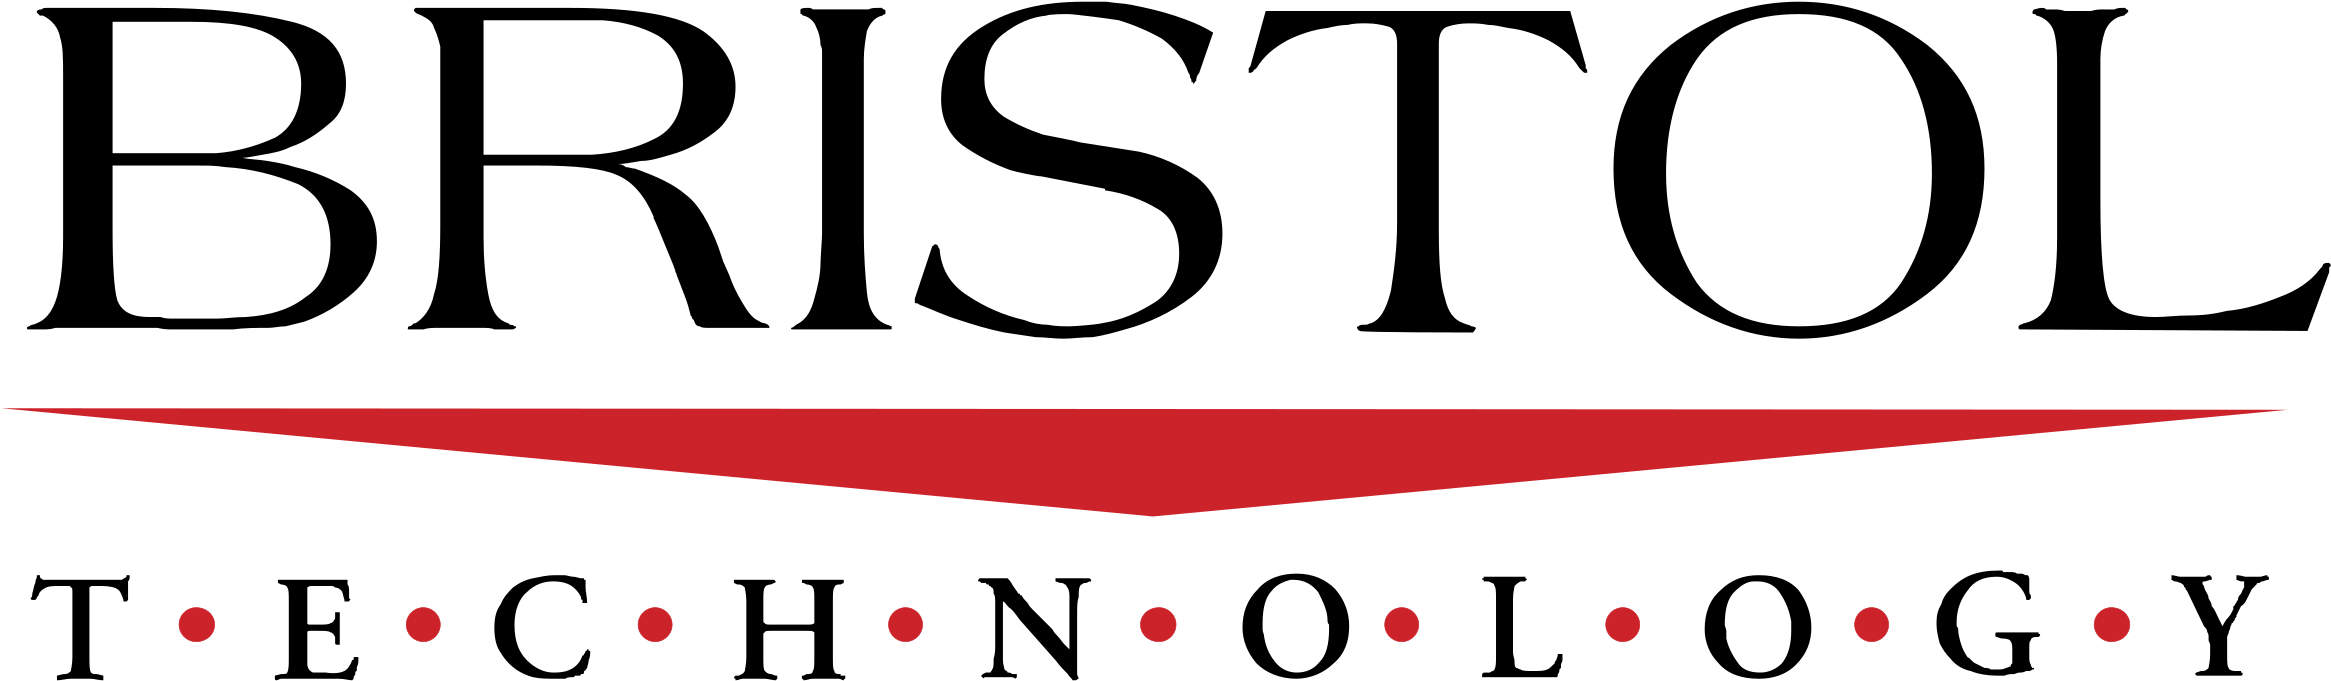 Bristol Technology Inc. logo